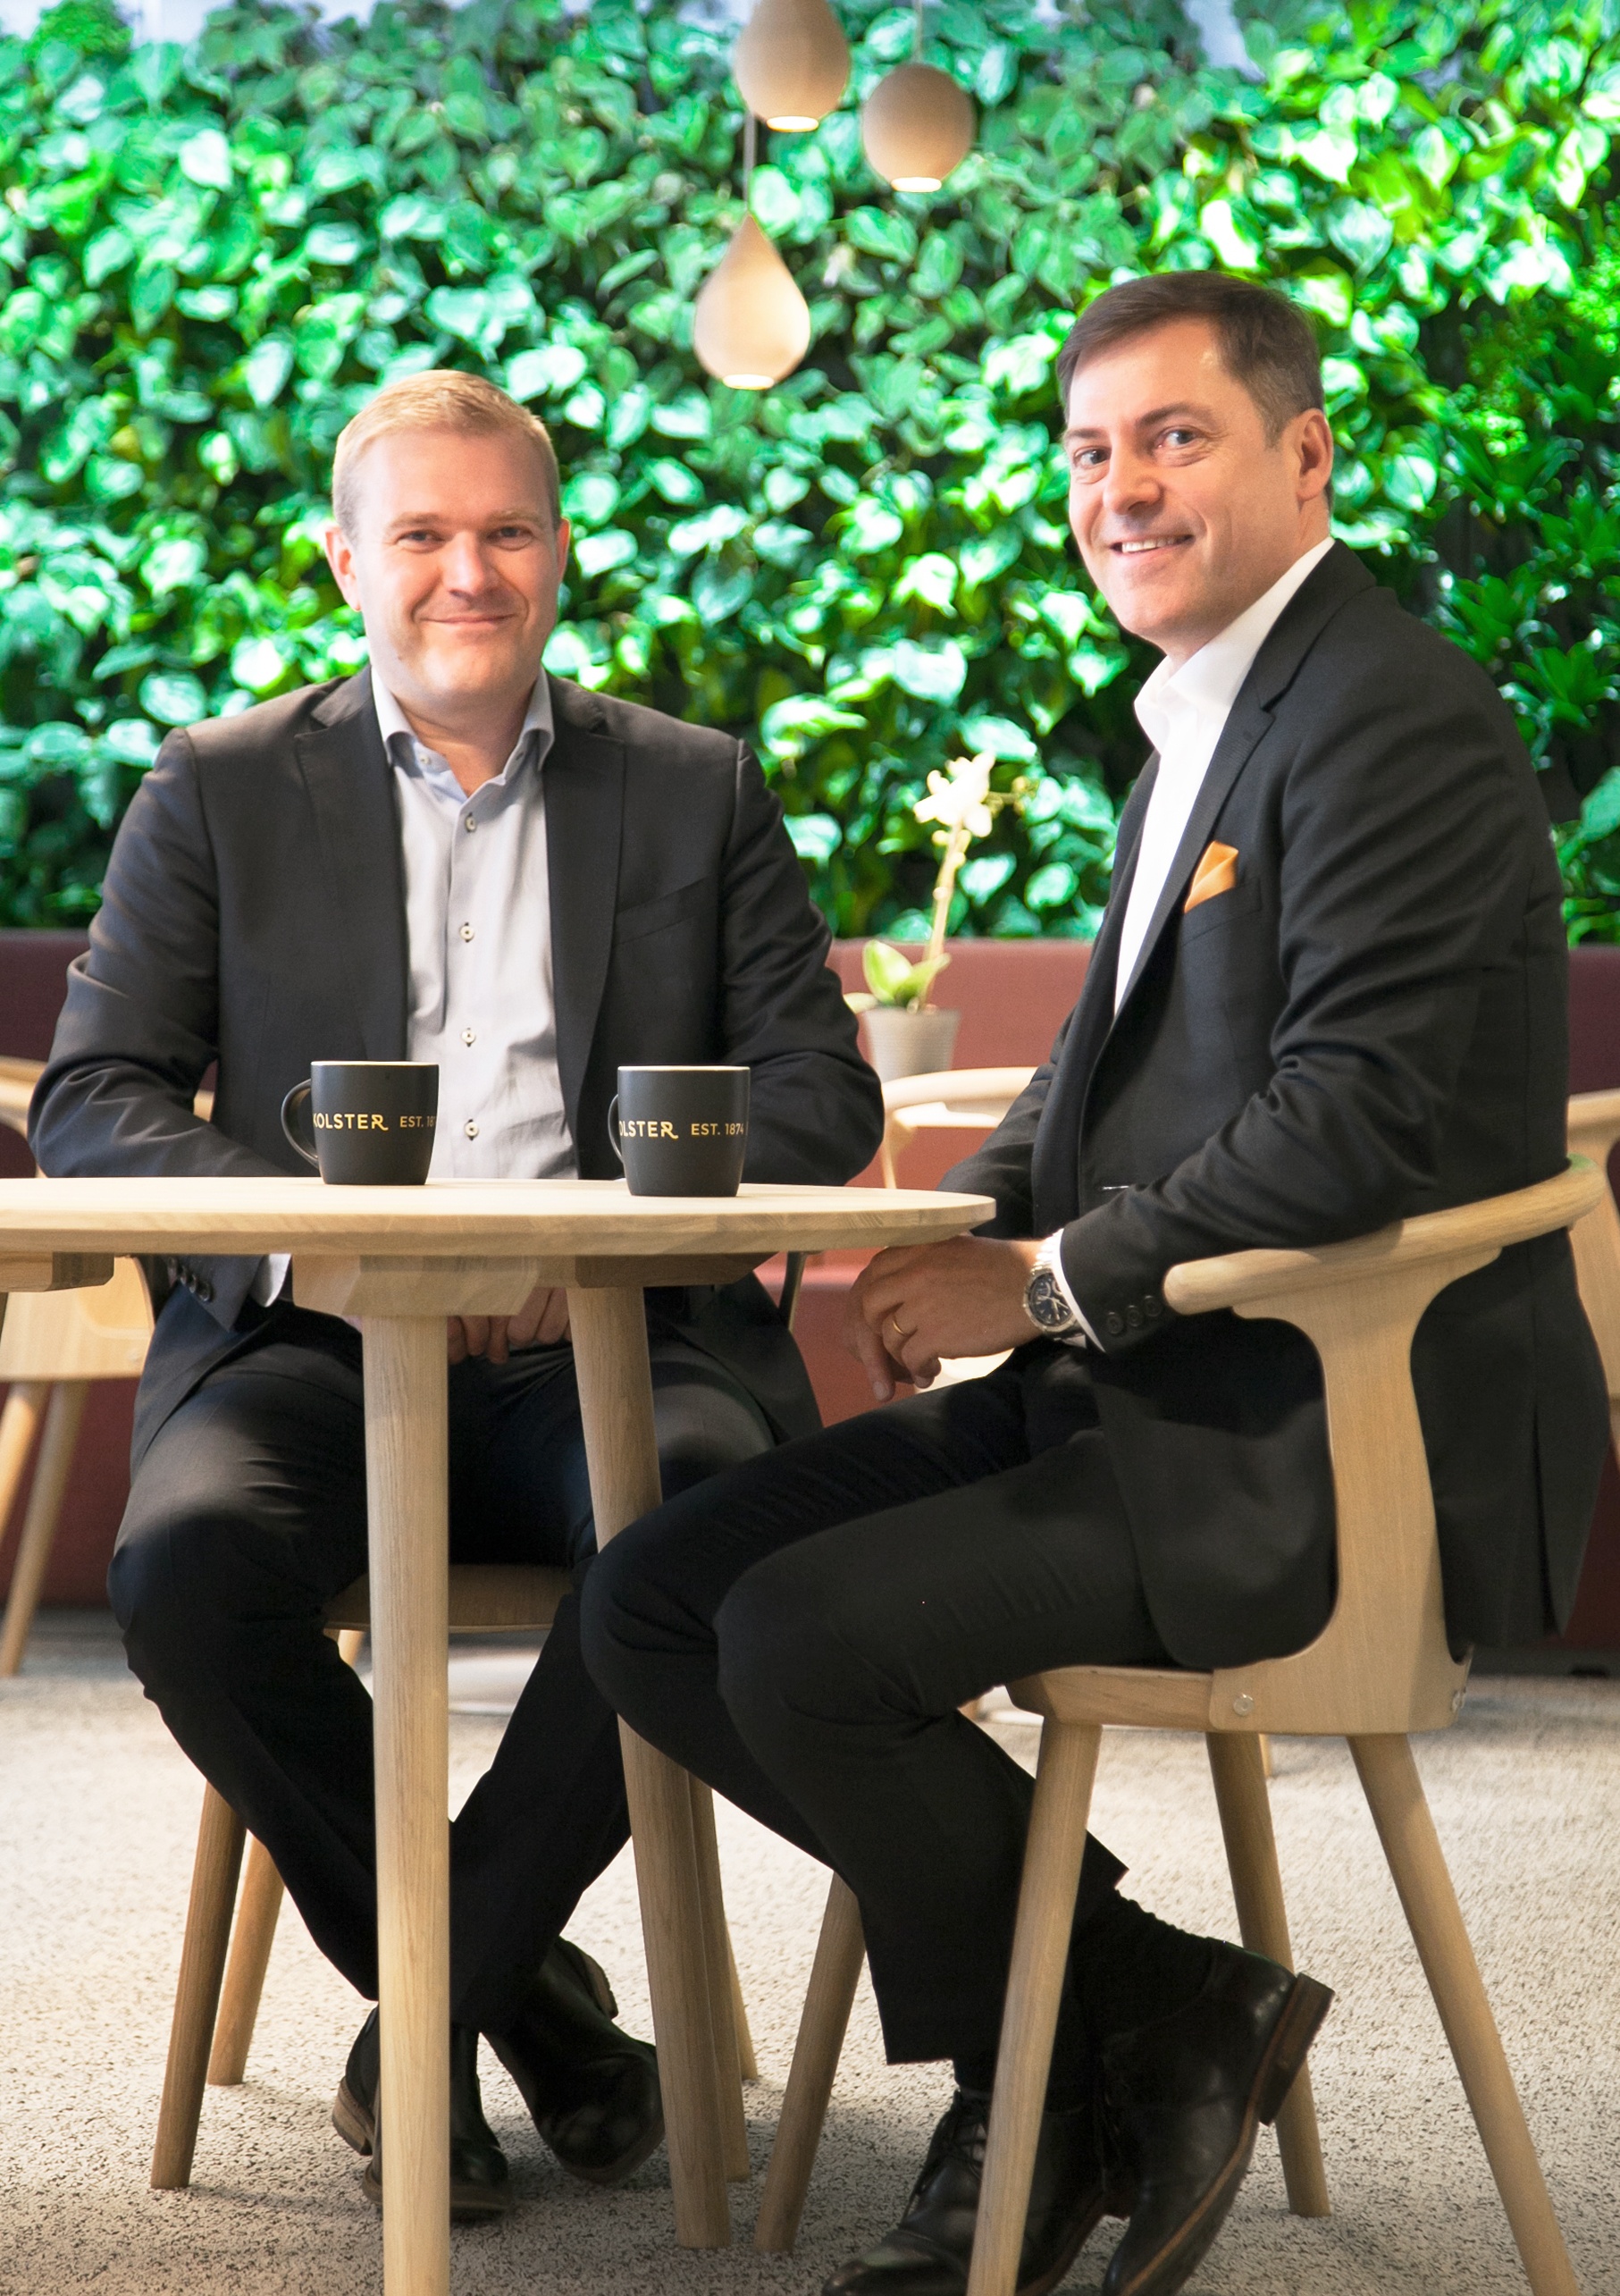 Chairman Kim Kolster and CEO Timo Helosuo